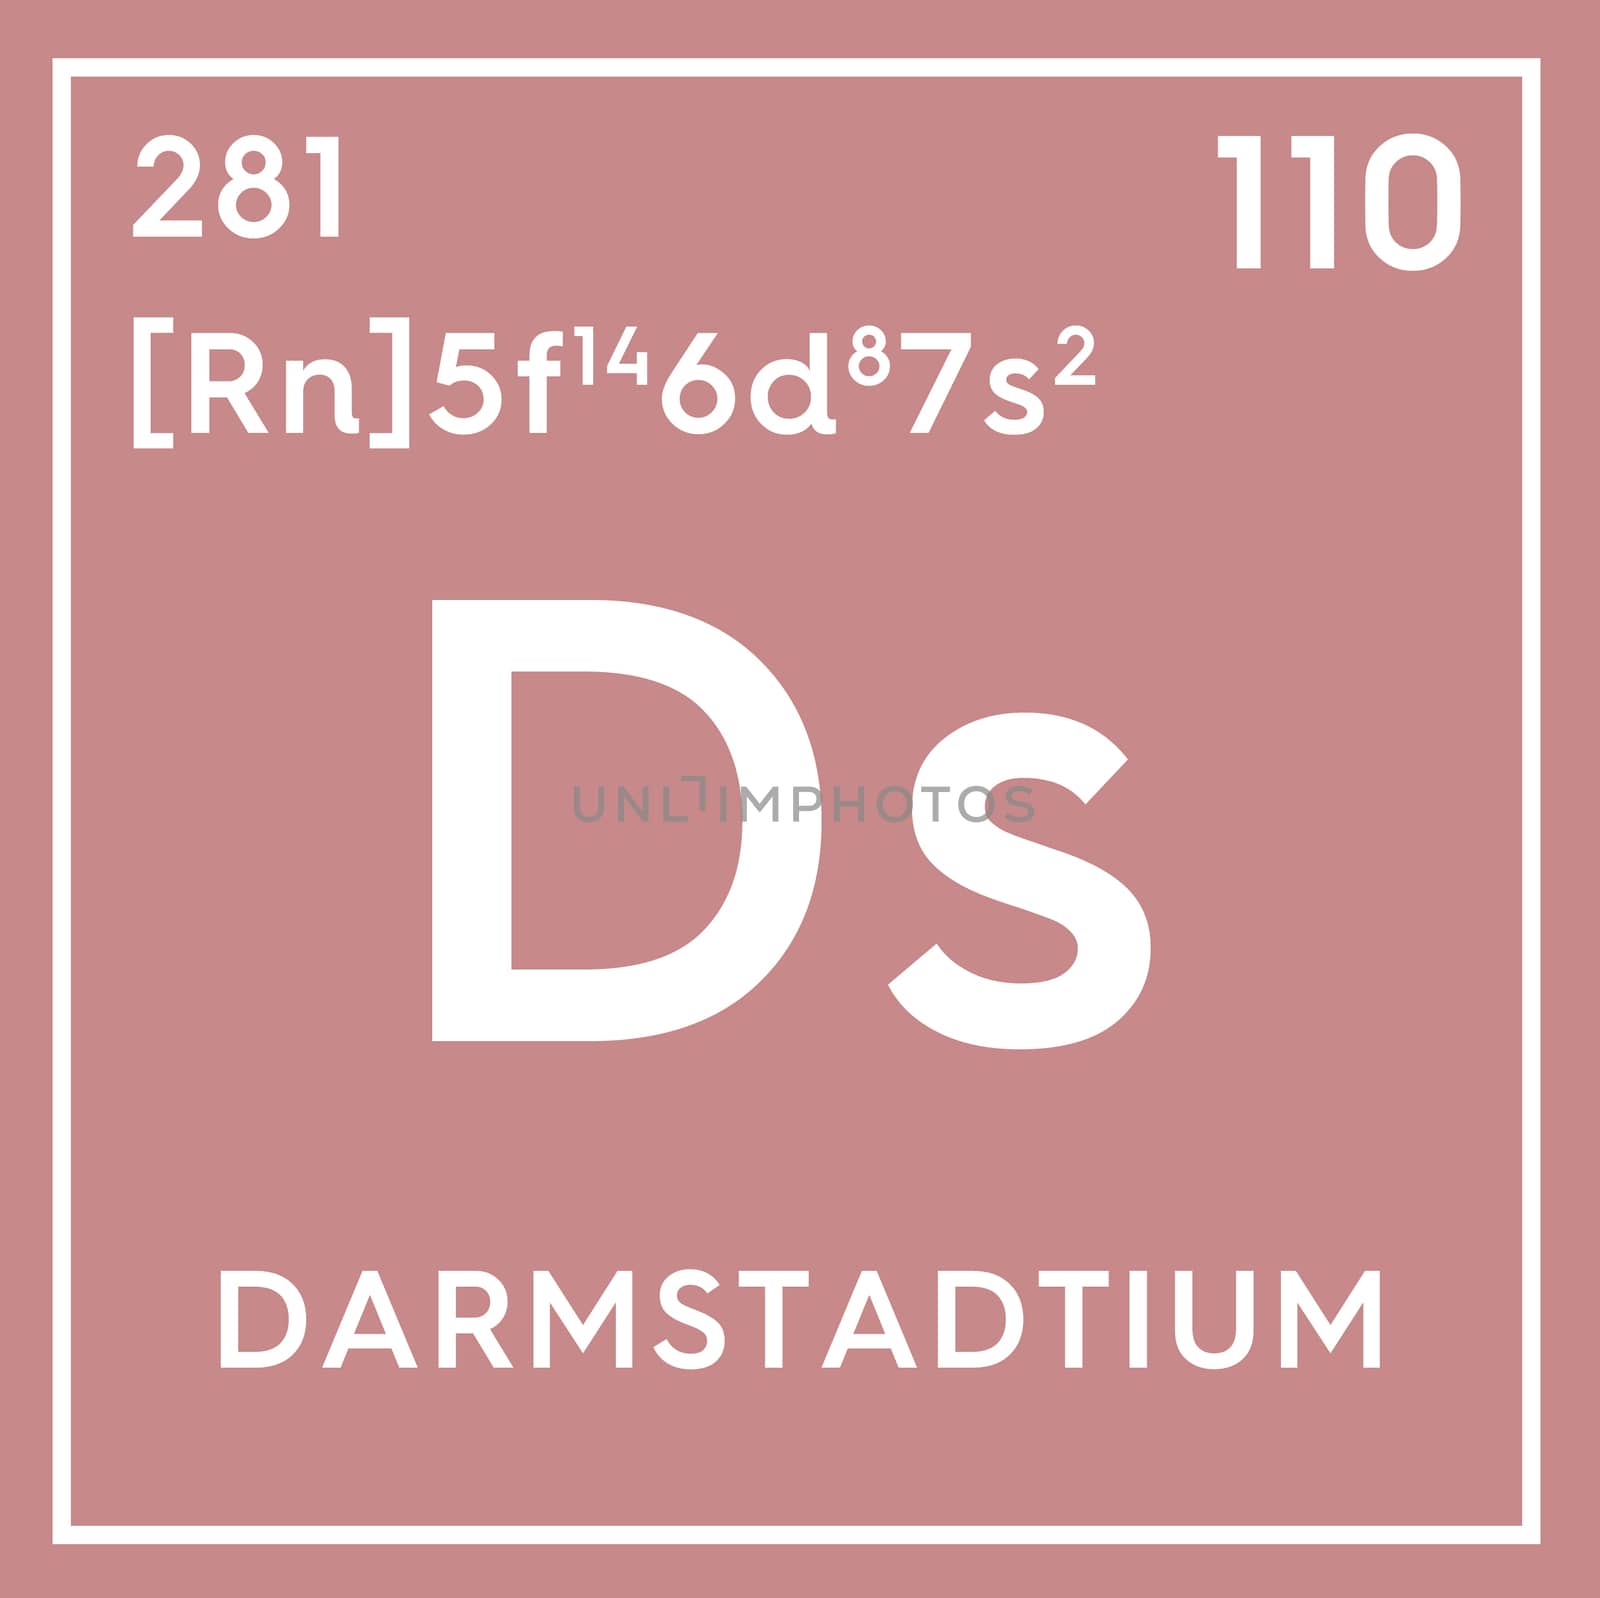 Darmstadtium. Transition metals. Chemical Element of Mendeleev's Periodic Table. Darmstadtium in square cube creative concept. 3D illustration.